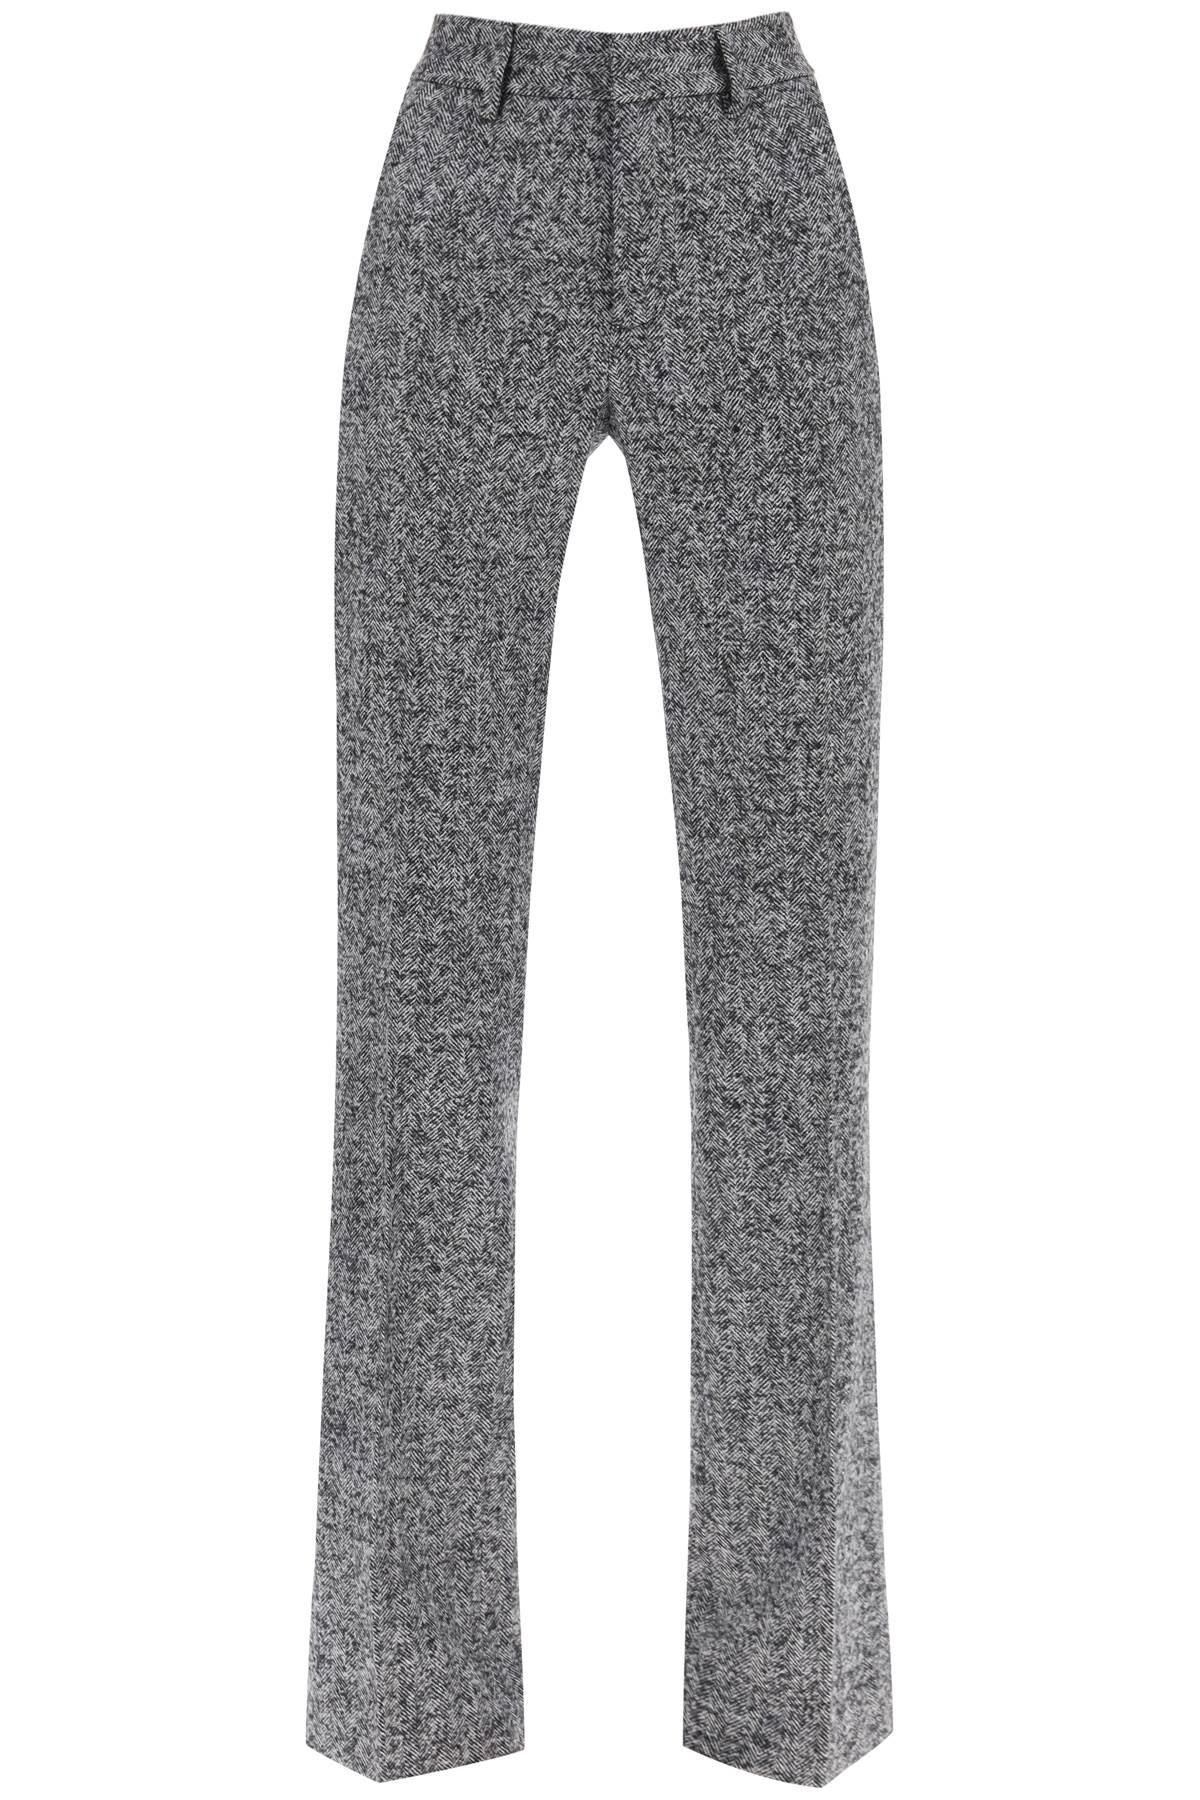 Alessandra rich pants with herringbone motif-women > clothing > trousers-Alessandra Rich-Urbanheer